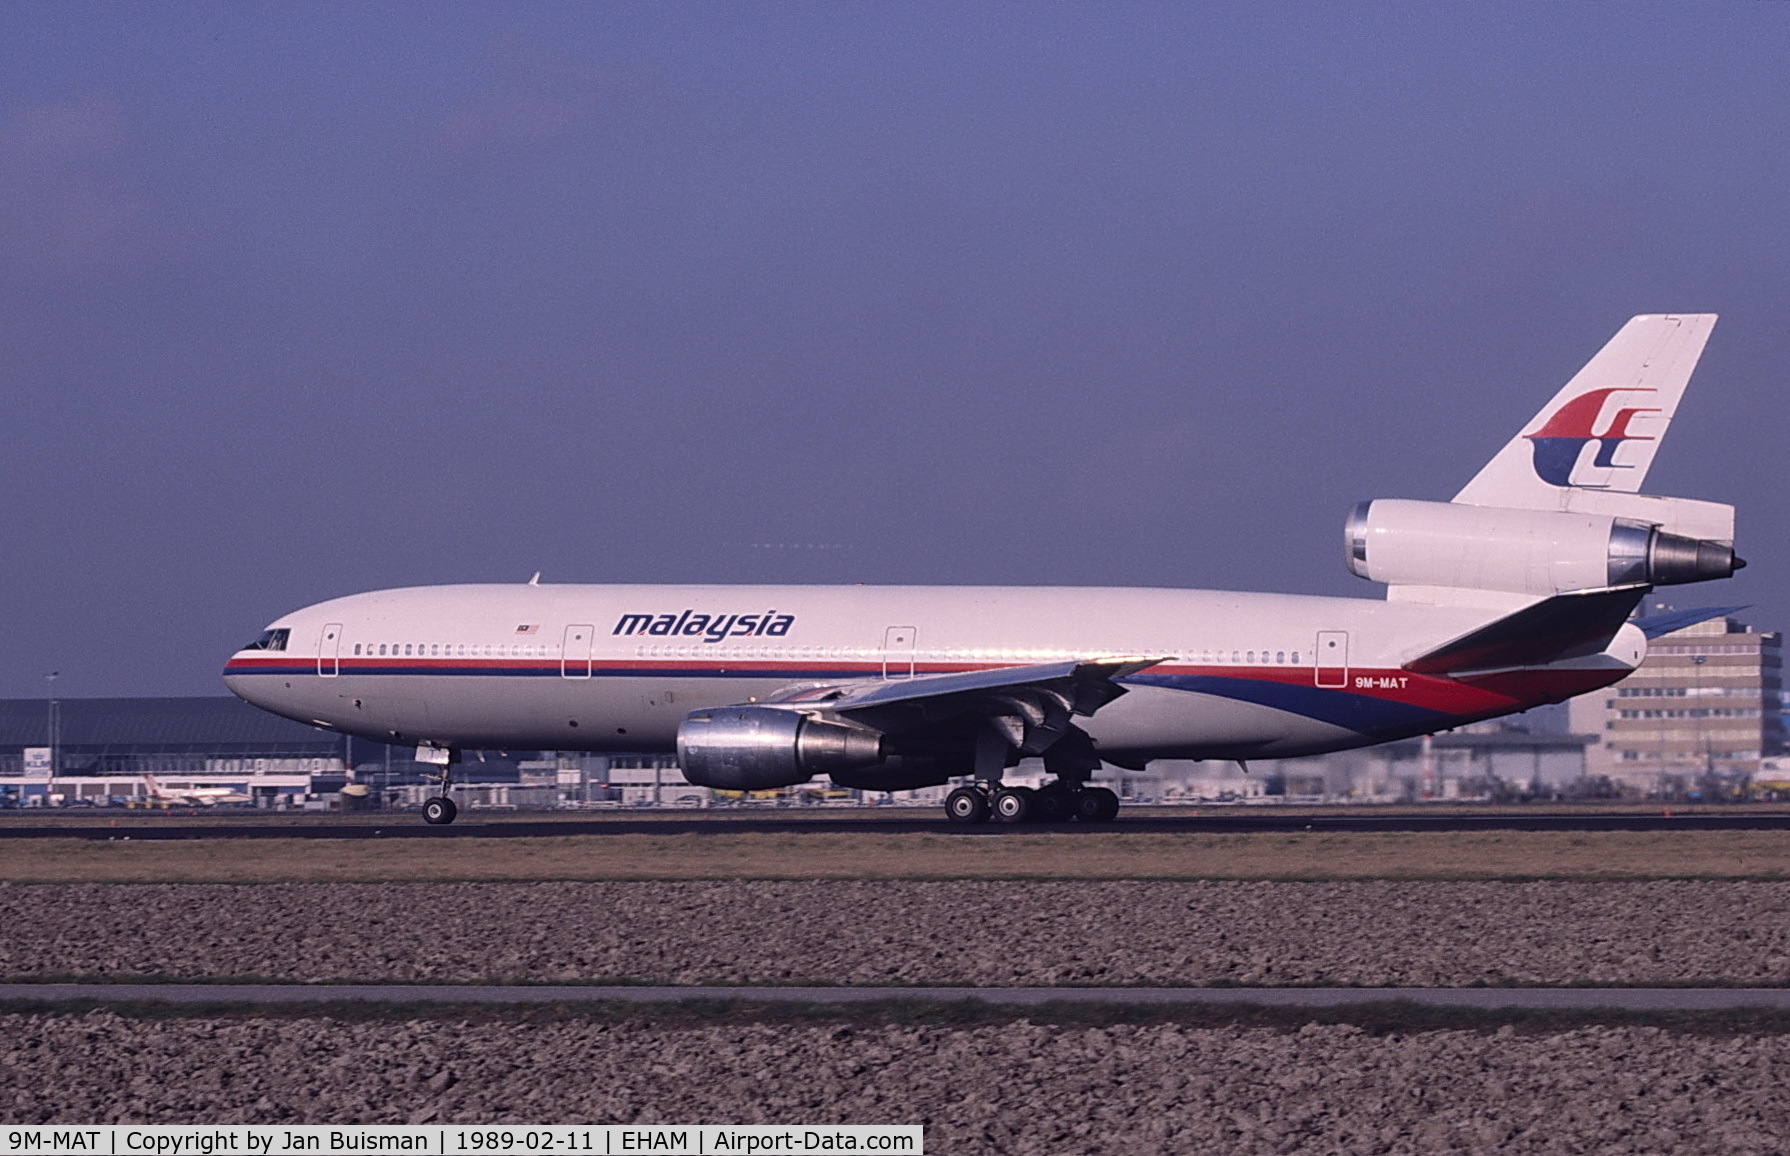 9M-MAT, 1974 Douglas DC-10-30 C/N 46640, Malysia Airlines